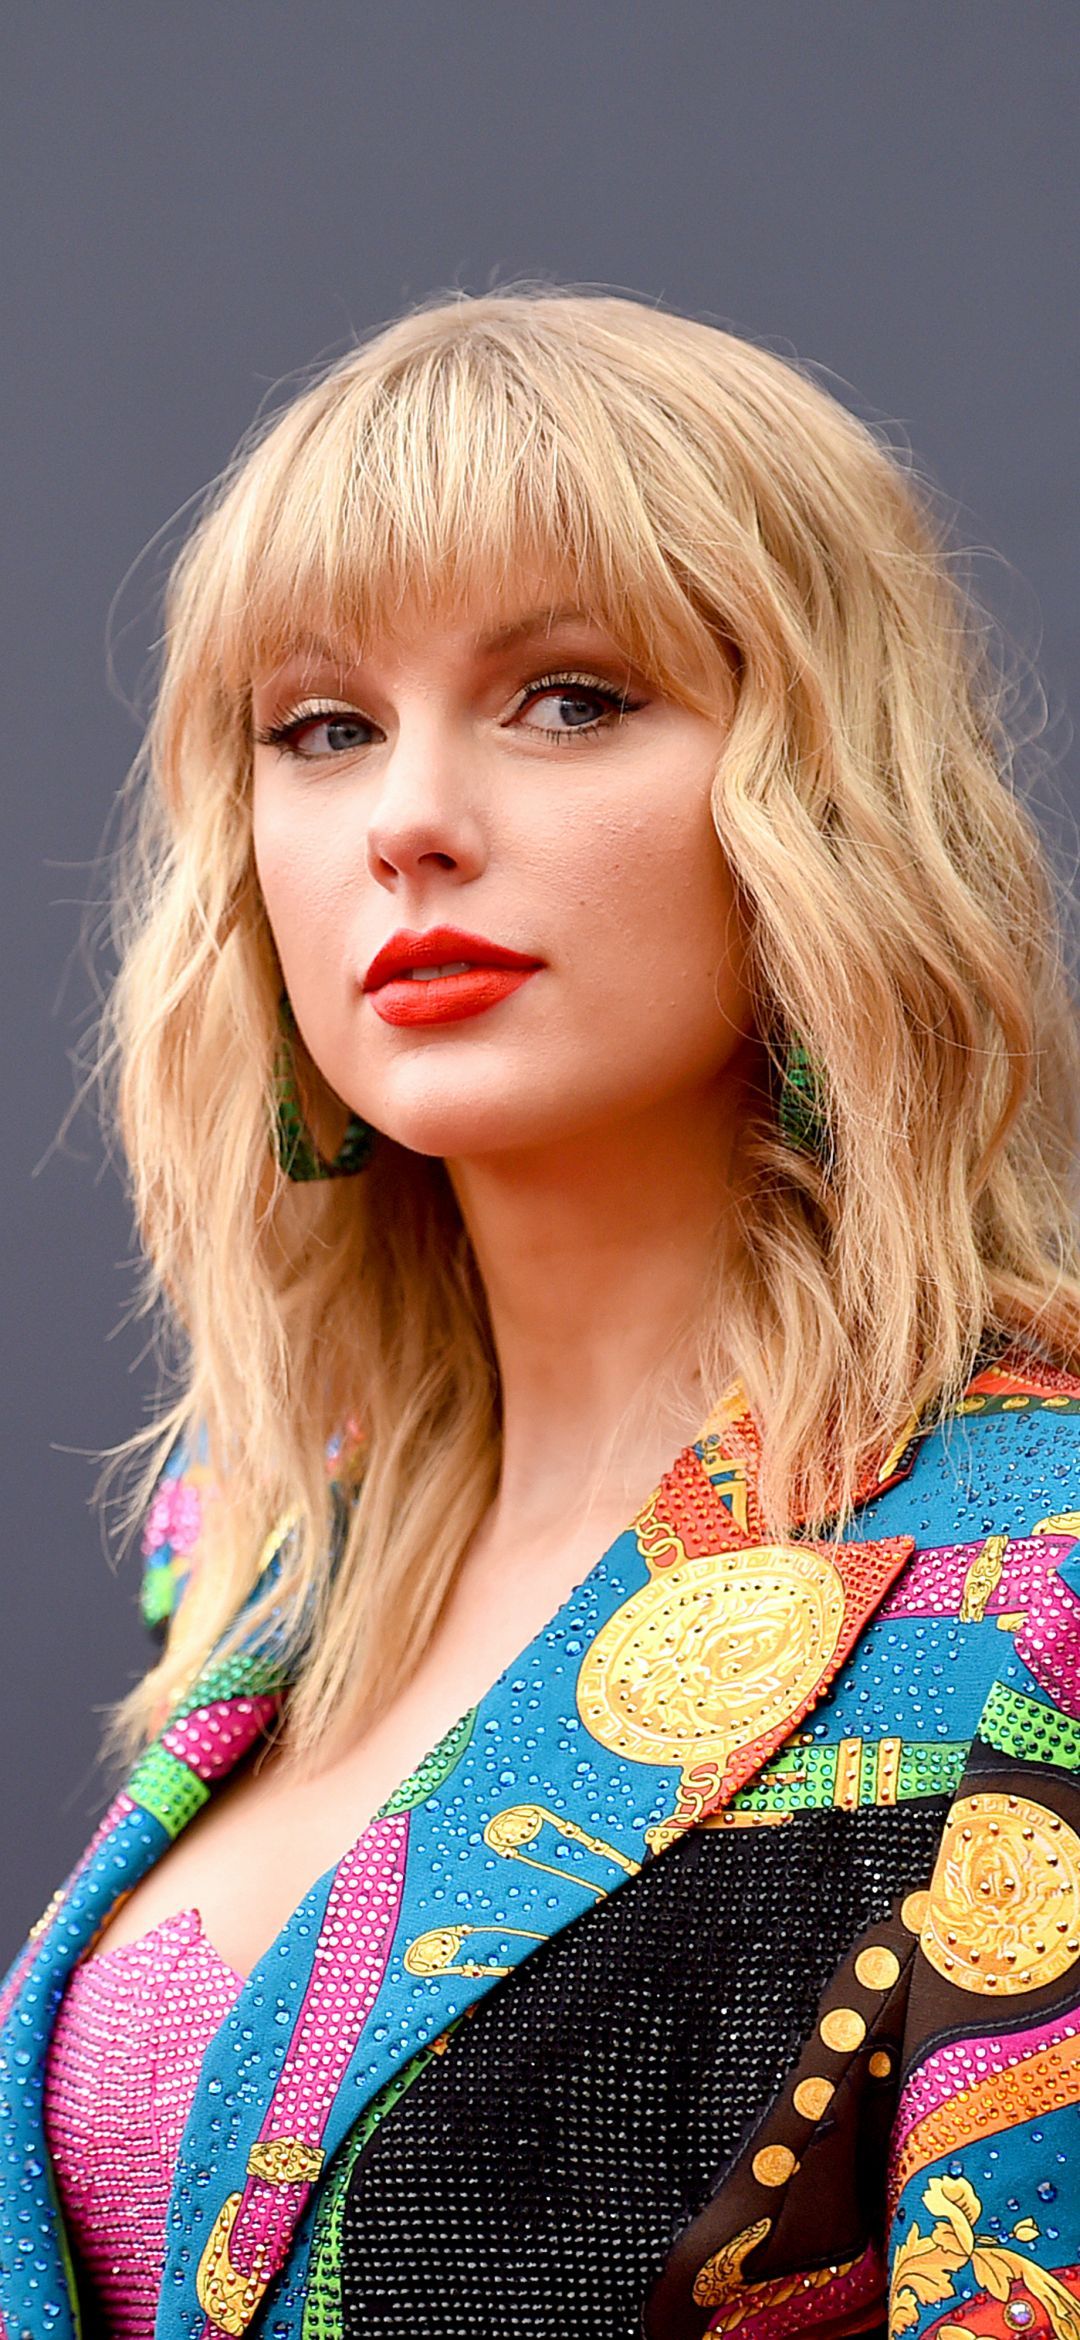 Taylor Swift mobile wallpaper. Taylor swift hot, Taylor swift wallpaper, Taylor alison swift